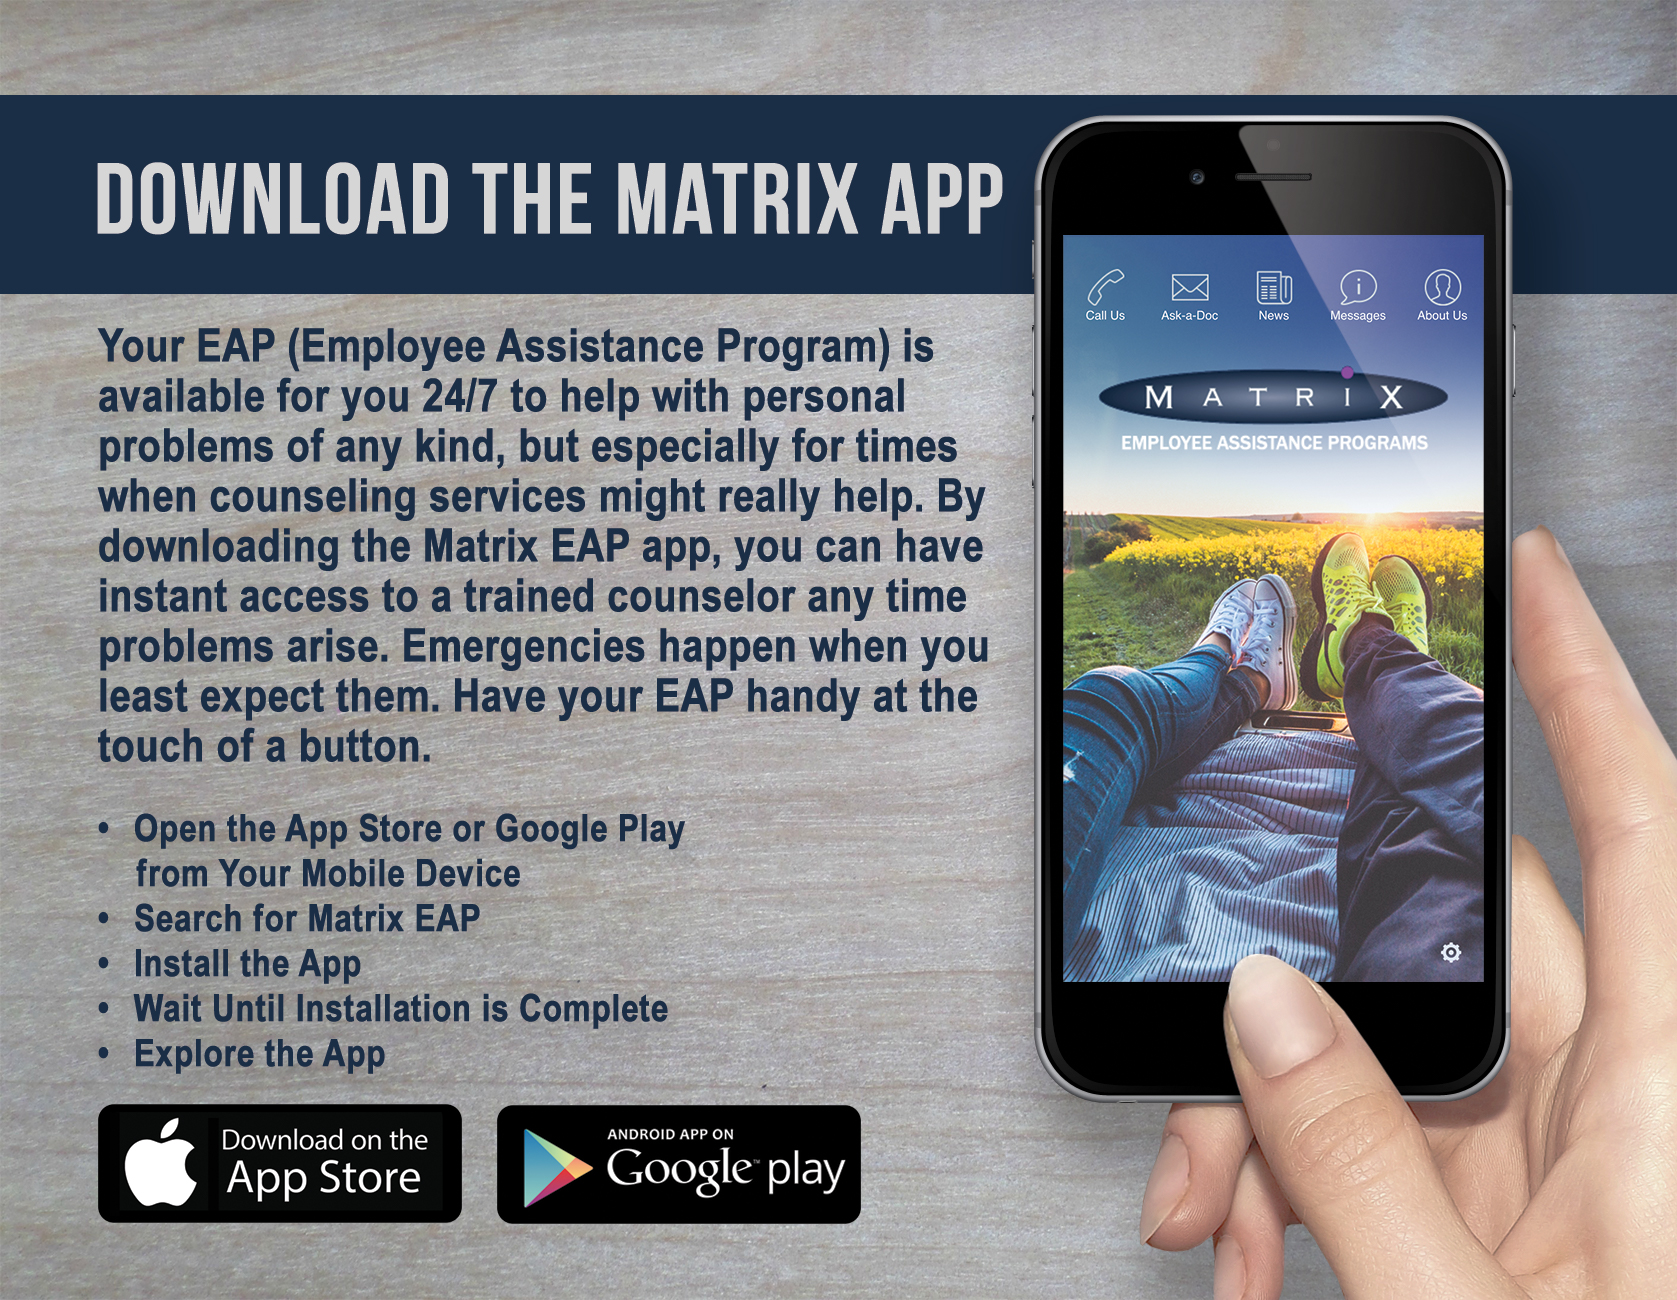 Download the matrix app graphic